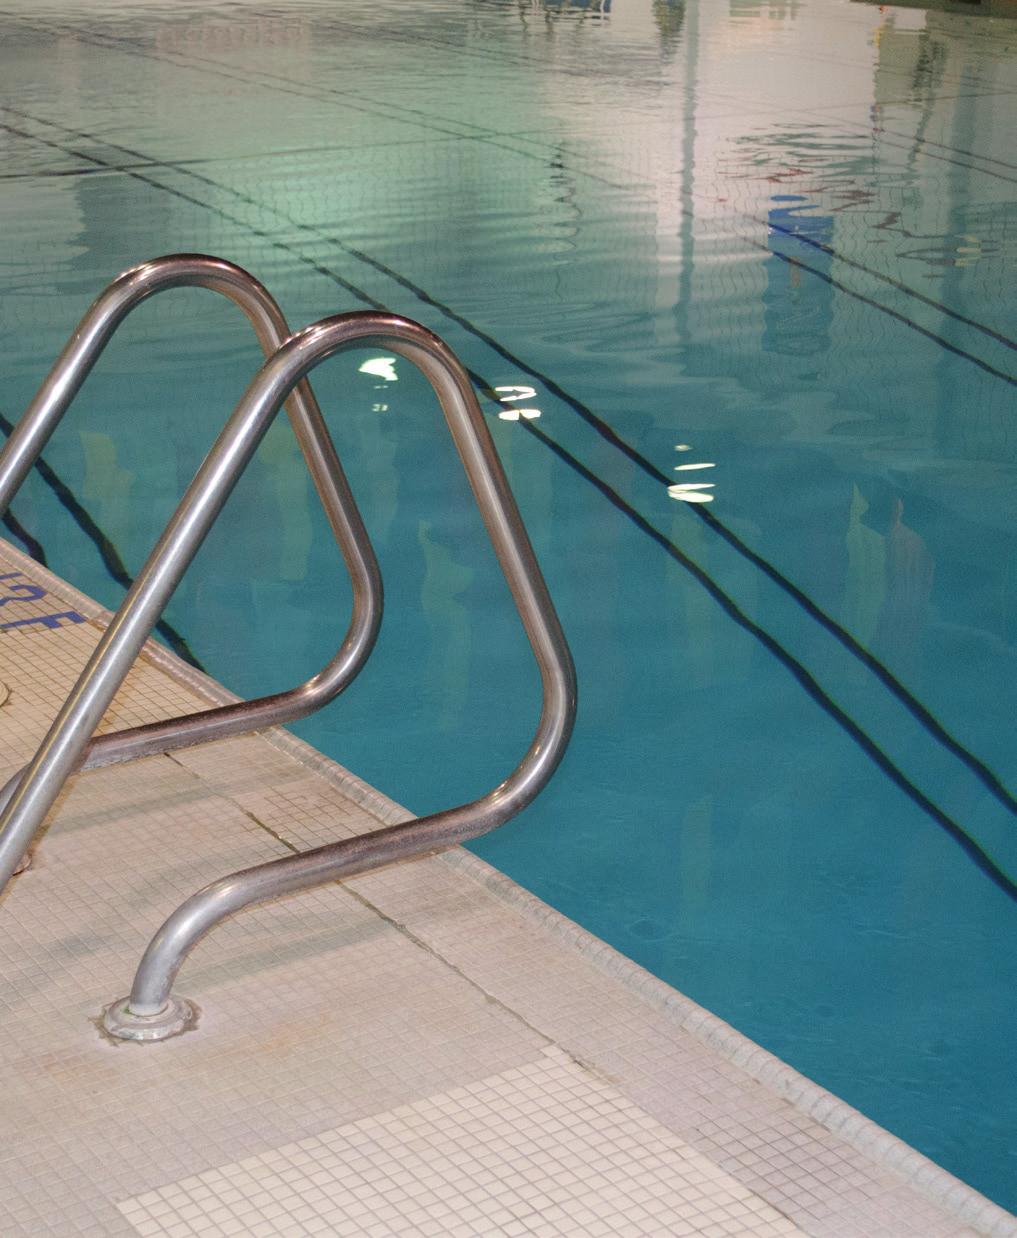 WINTER SWIM LESSONS CHILDREN'S PRIVATE & SEMI-PRIVATE SWIM LESSONS To arrange Private or Semi-Private swimming lessons, please call the Aquatics Supervisor at 519-396-3491 ext.